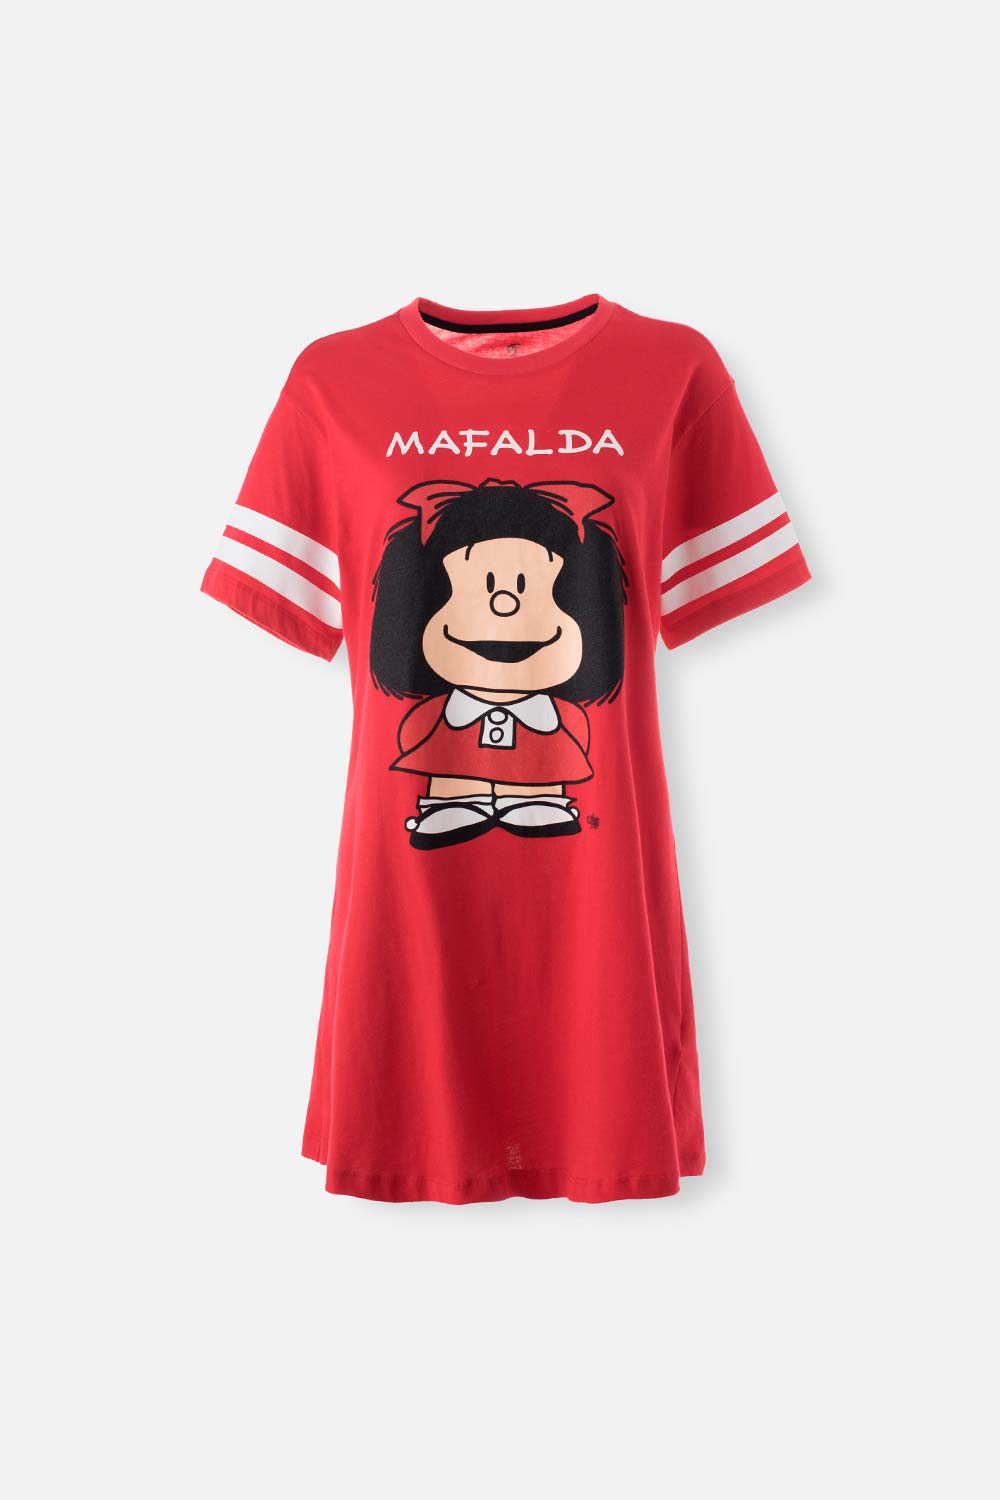 Pijama de Mafalda roja tipo batola para mujer XS-0